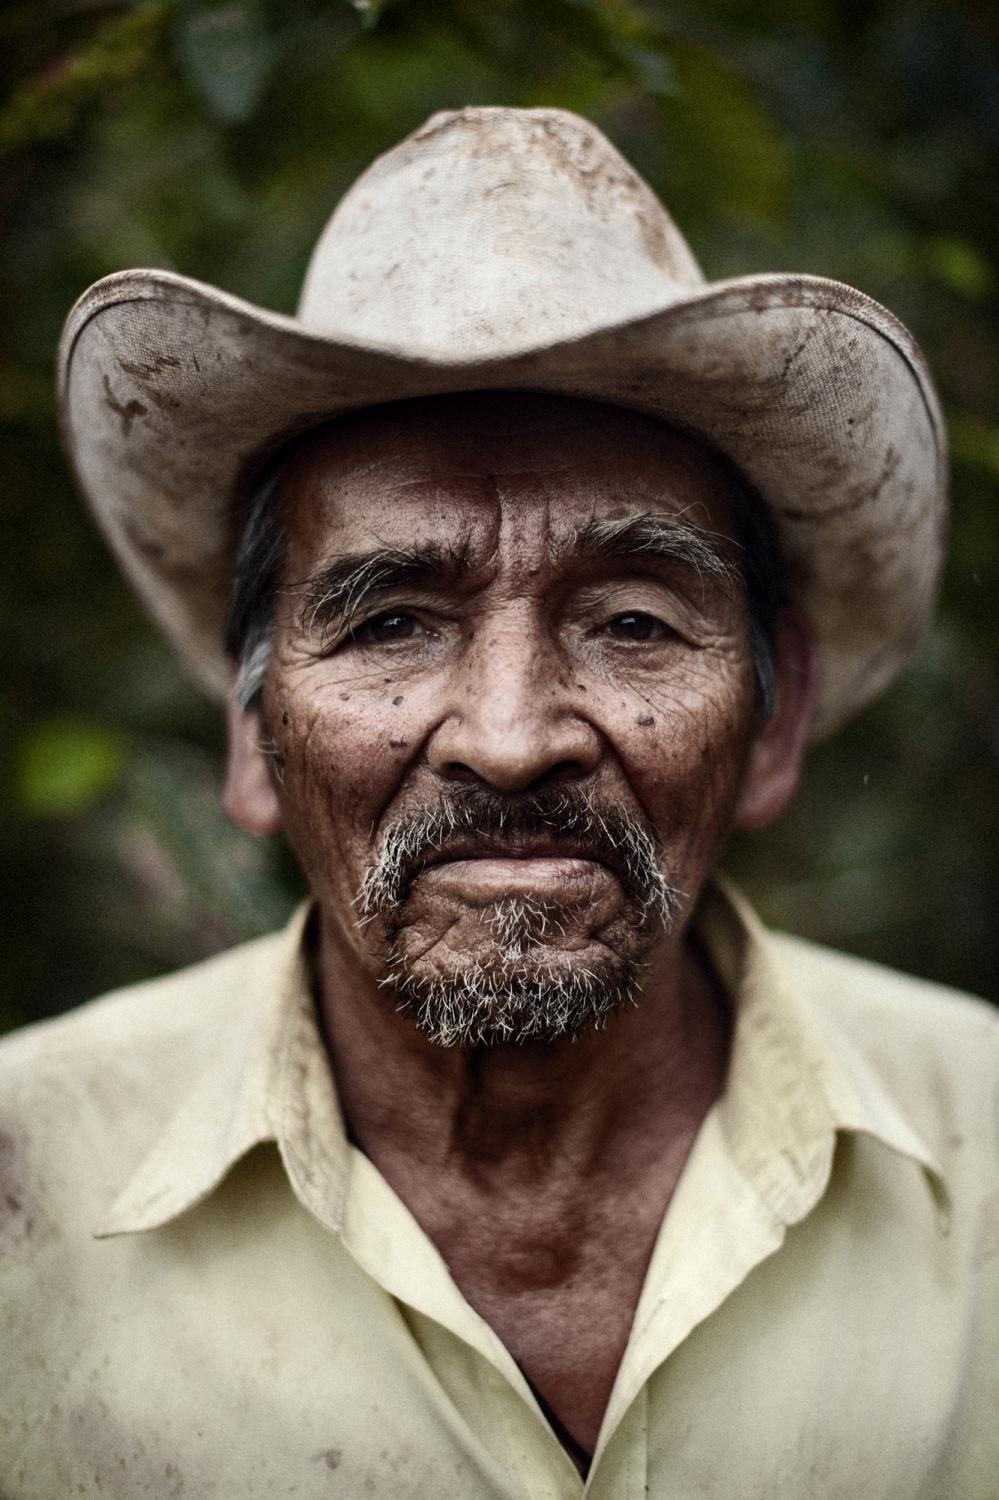 Microcredit / Central America - Jinotega, Nicaragua.
October 2010.
Portrait of Isidro...